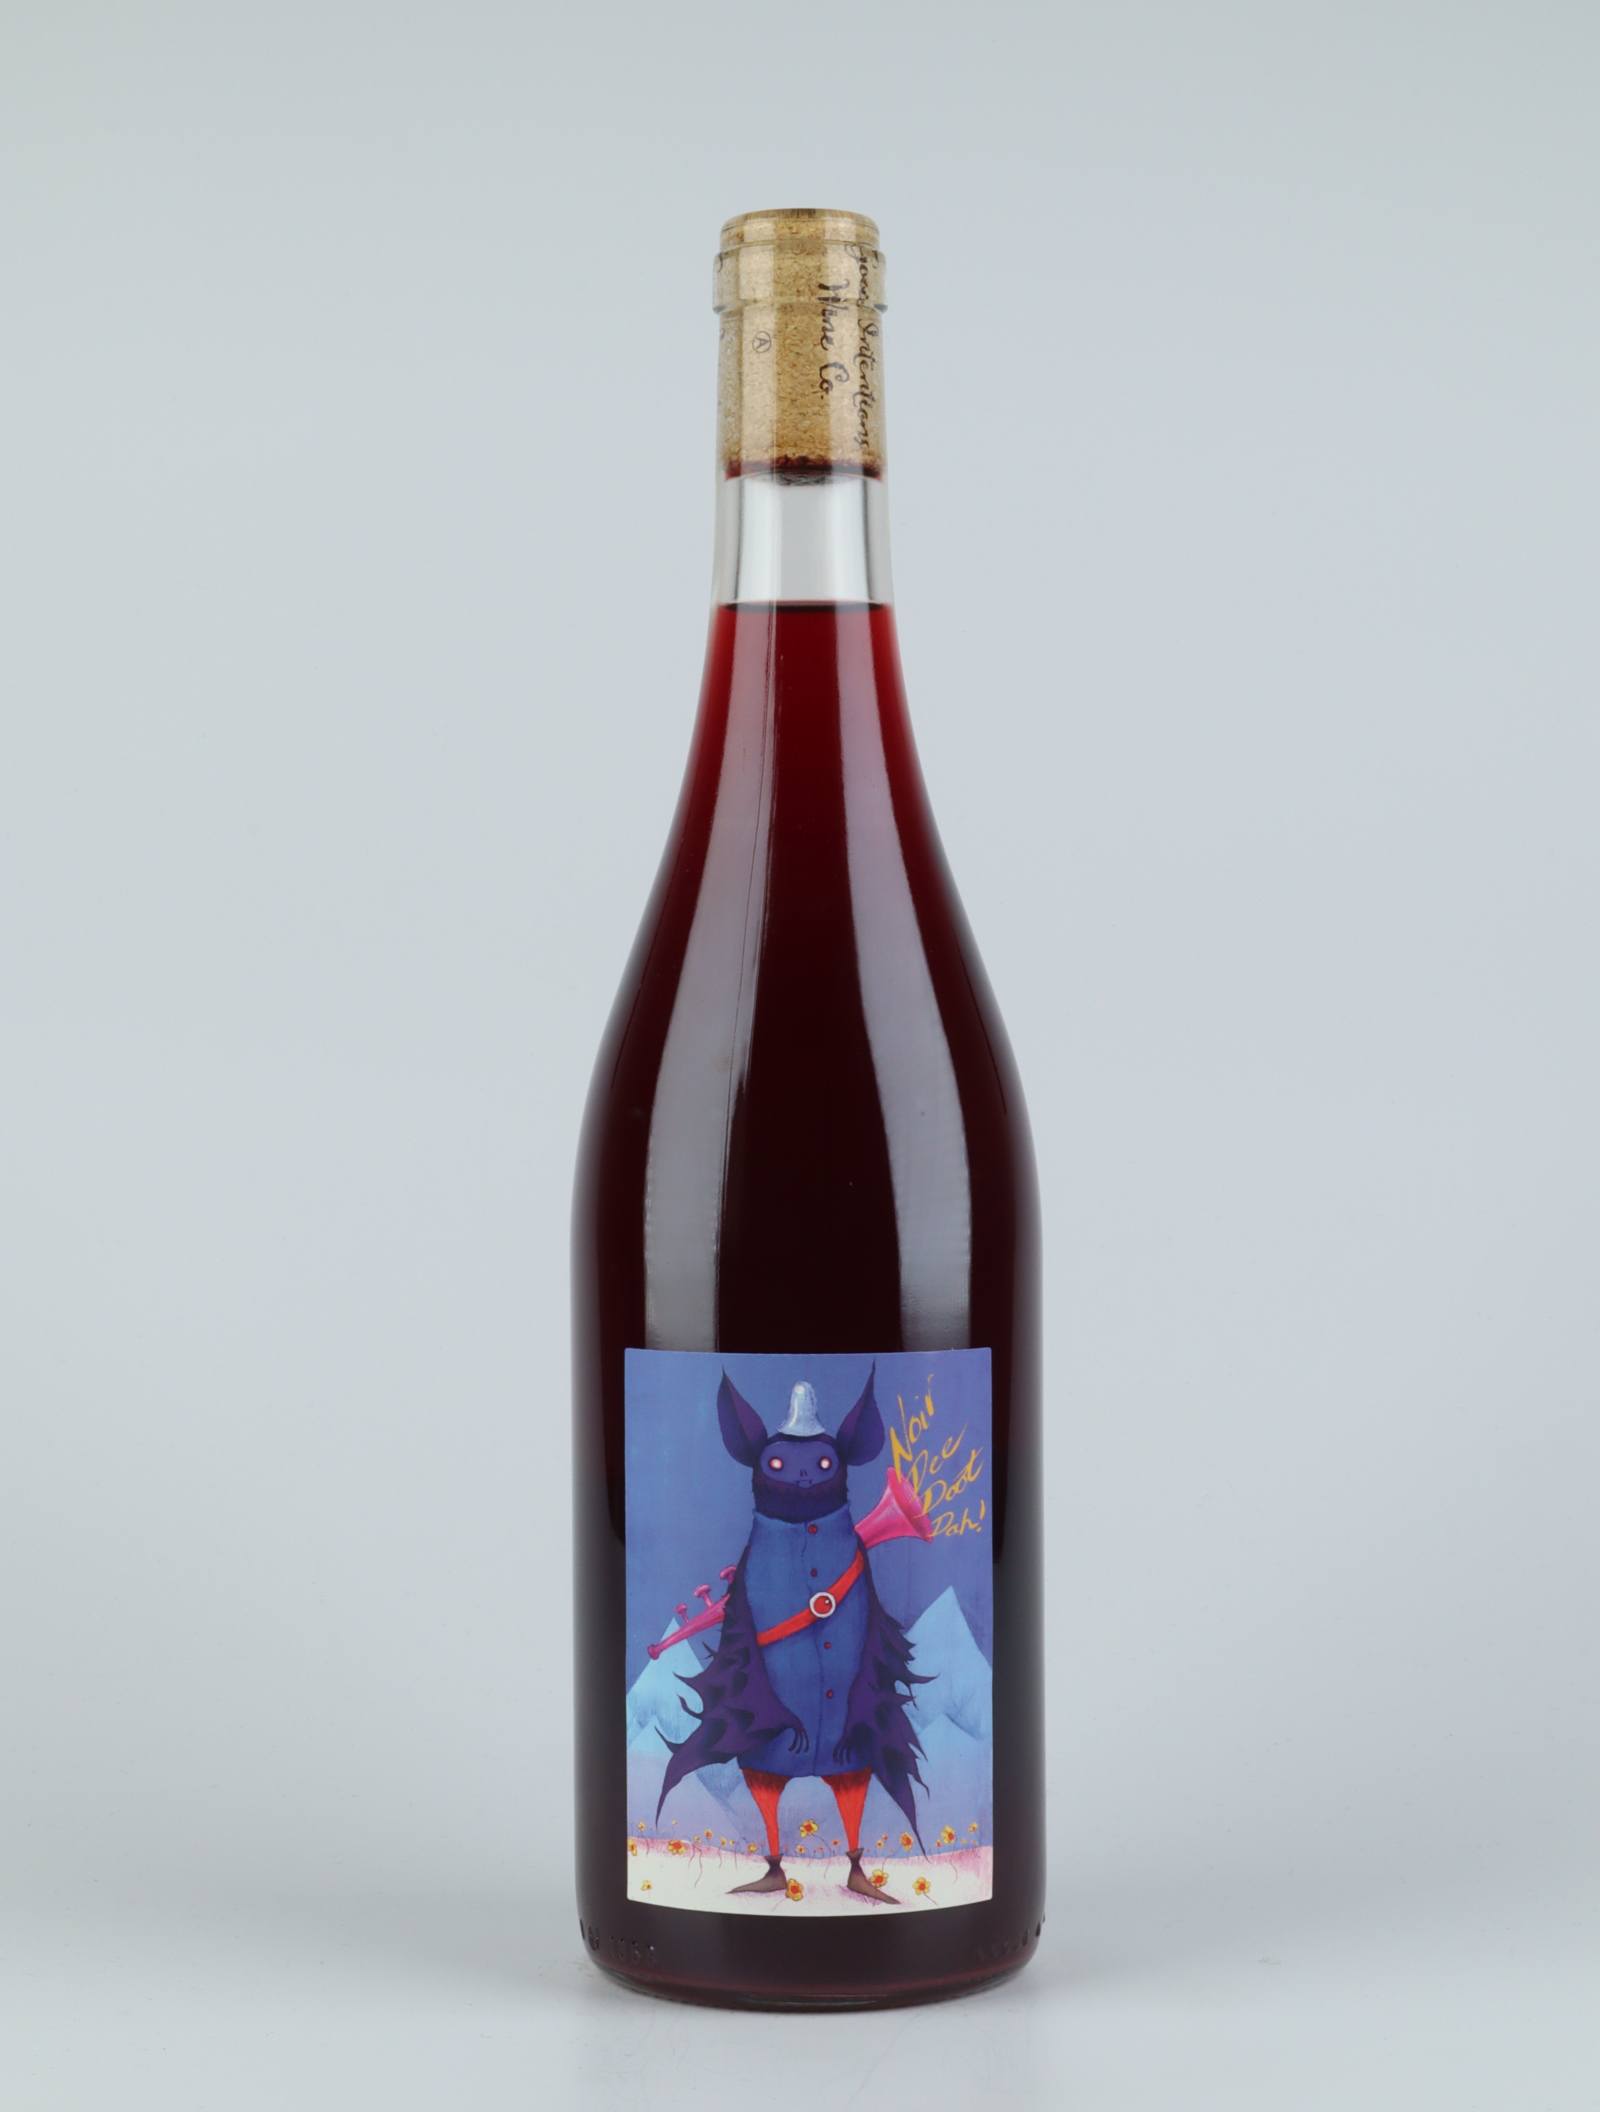 En flaske 2019 Noir Dee Doot Dah Rødvin fra Good Intentions Wine Co., South Australia i Australien